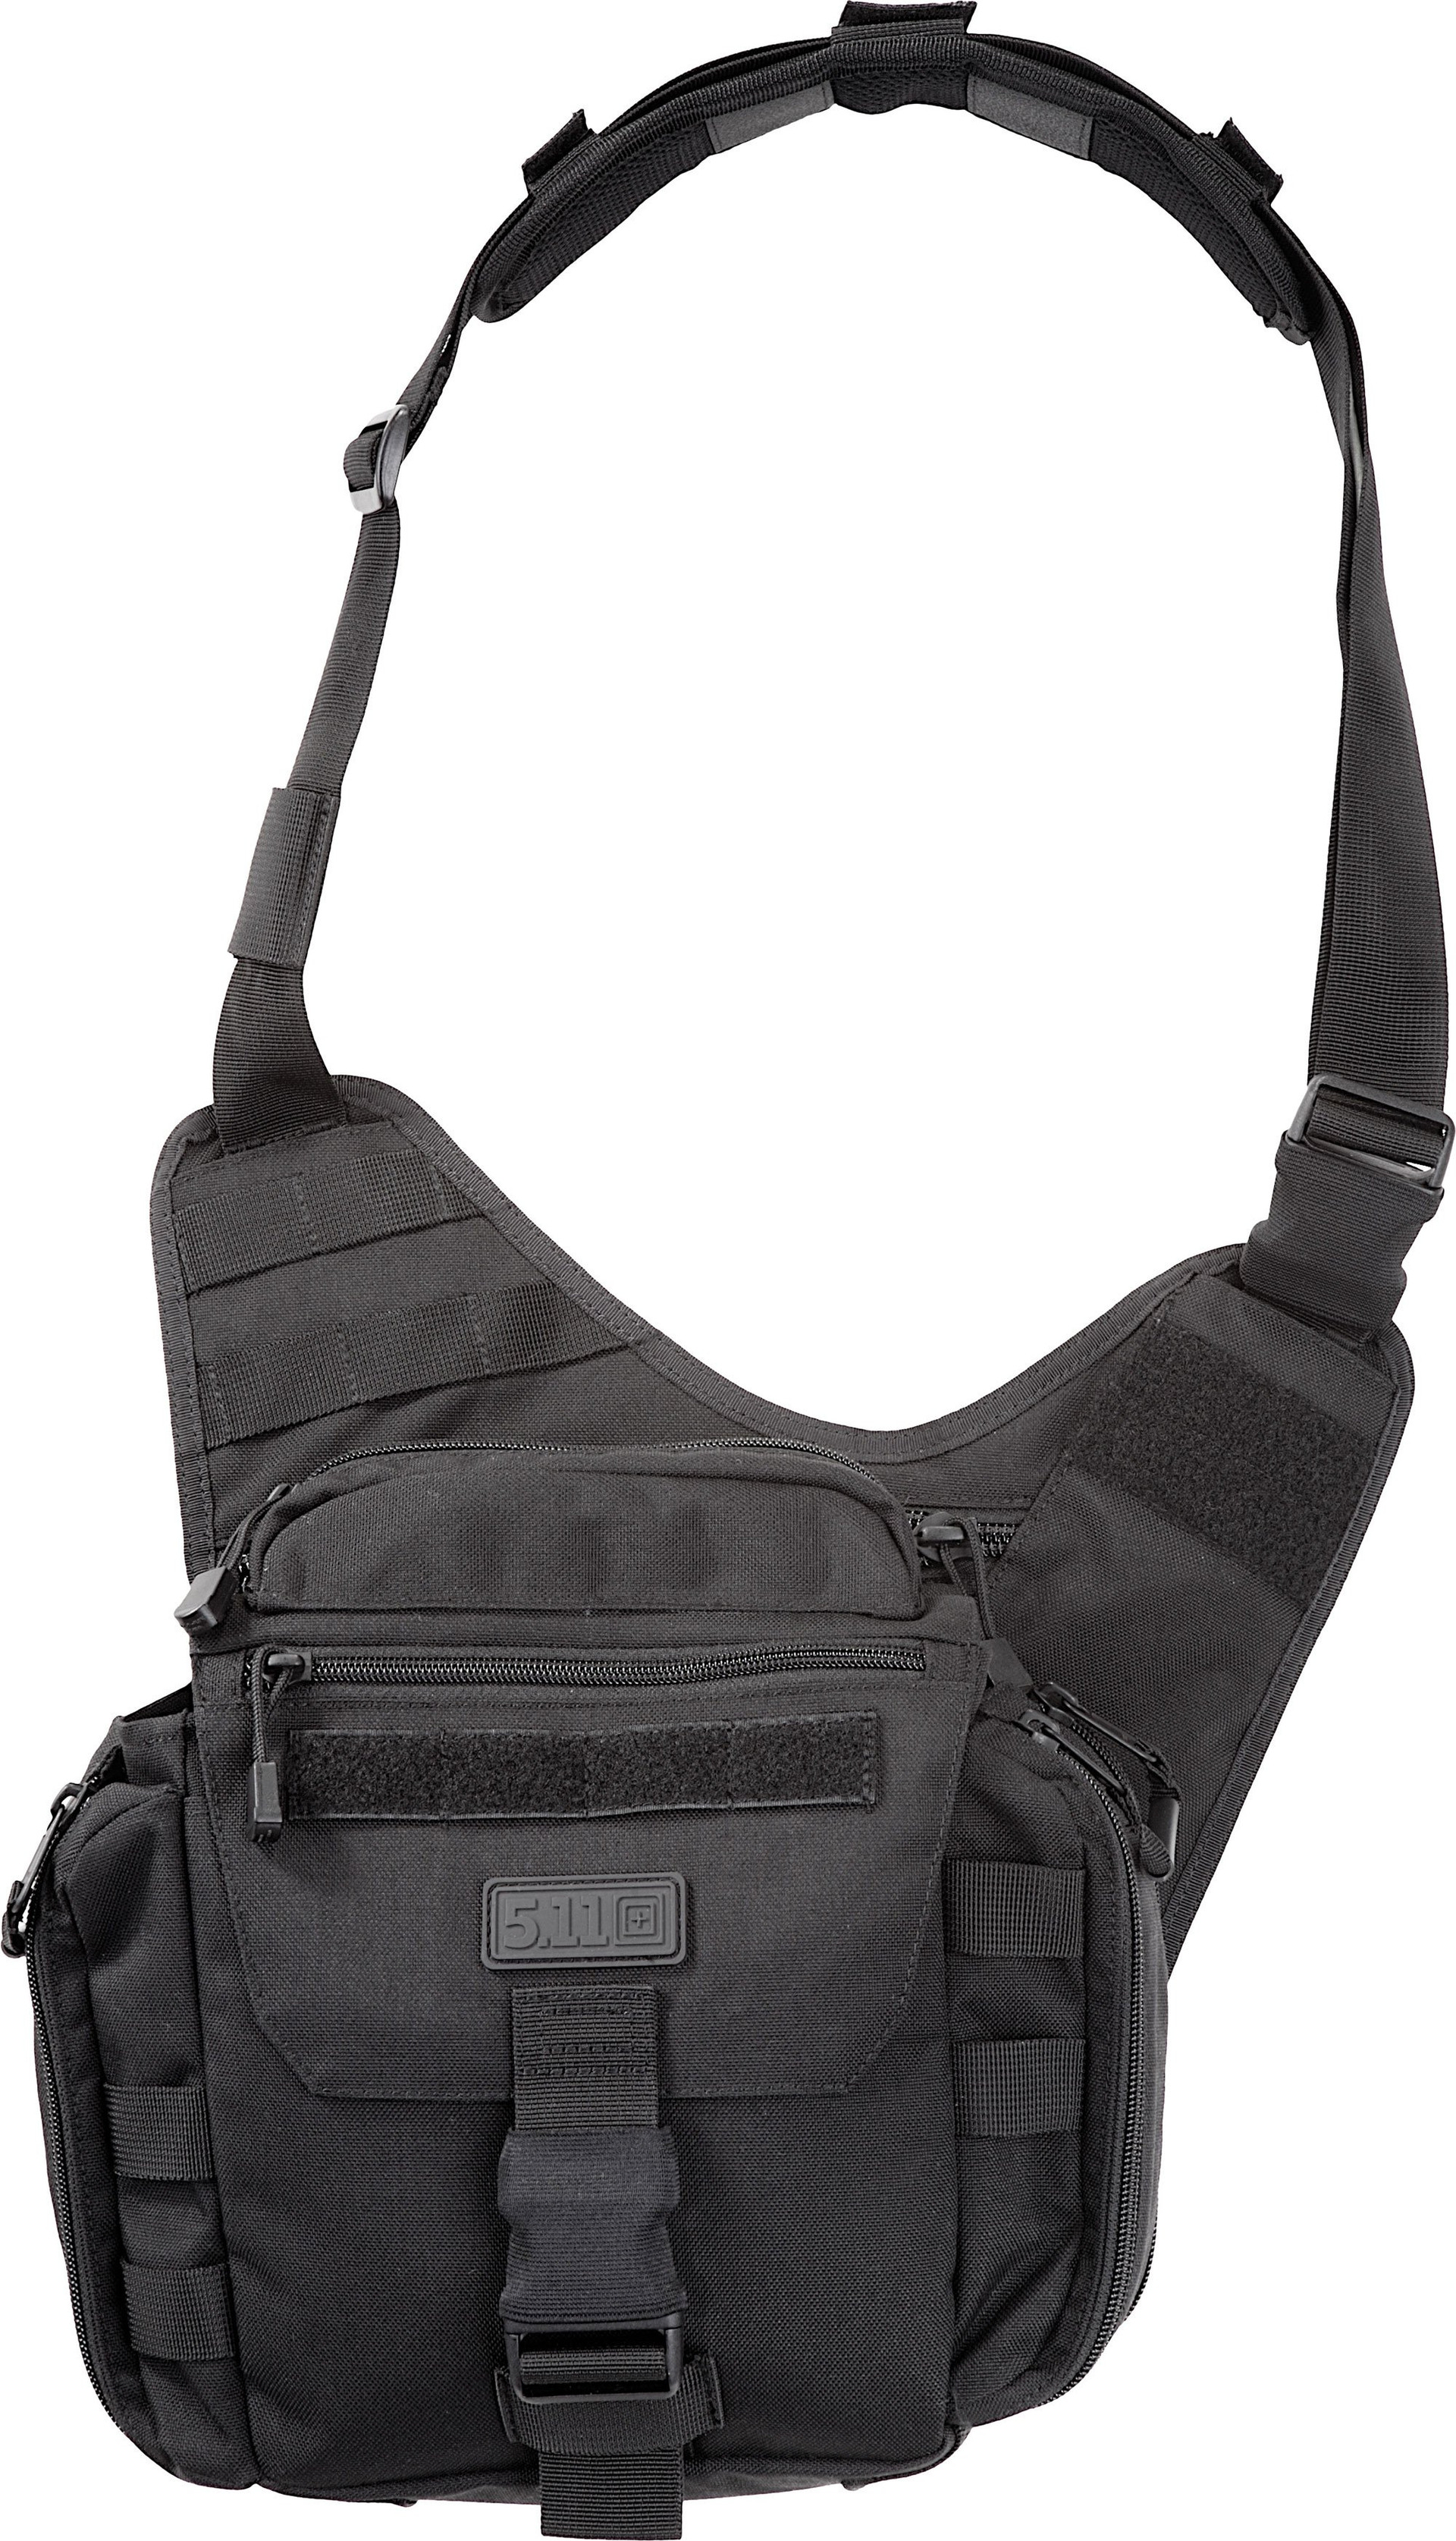 5.11 Tactical Push Pack | Carryall Travel Bag | Cross Body Pack